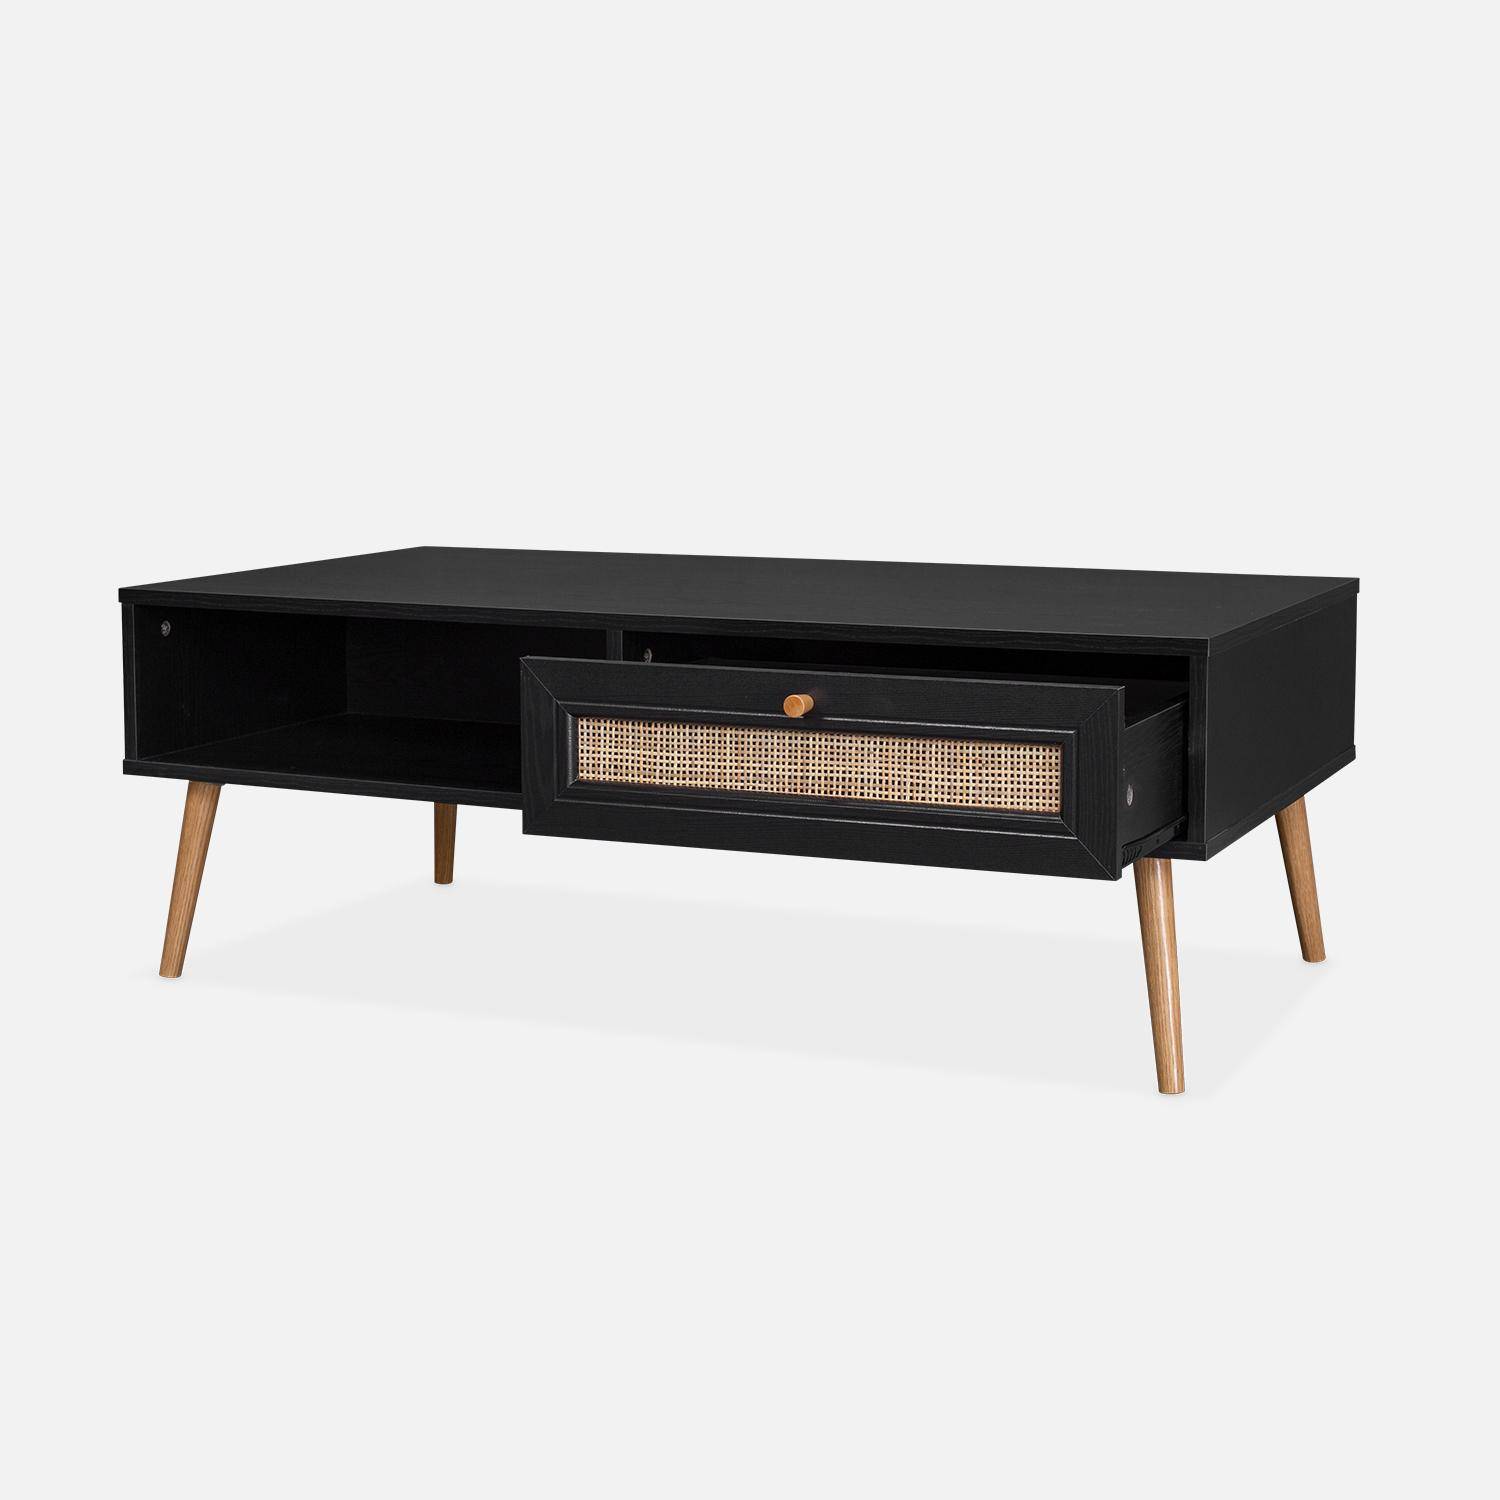  Wood and woven rattan coffee table with storage, 110x59x39cm, black, Boheme,sweeek,Photo4